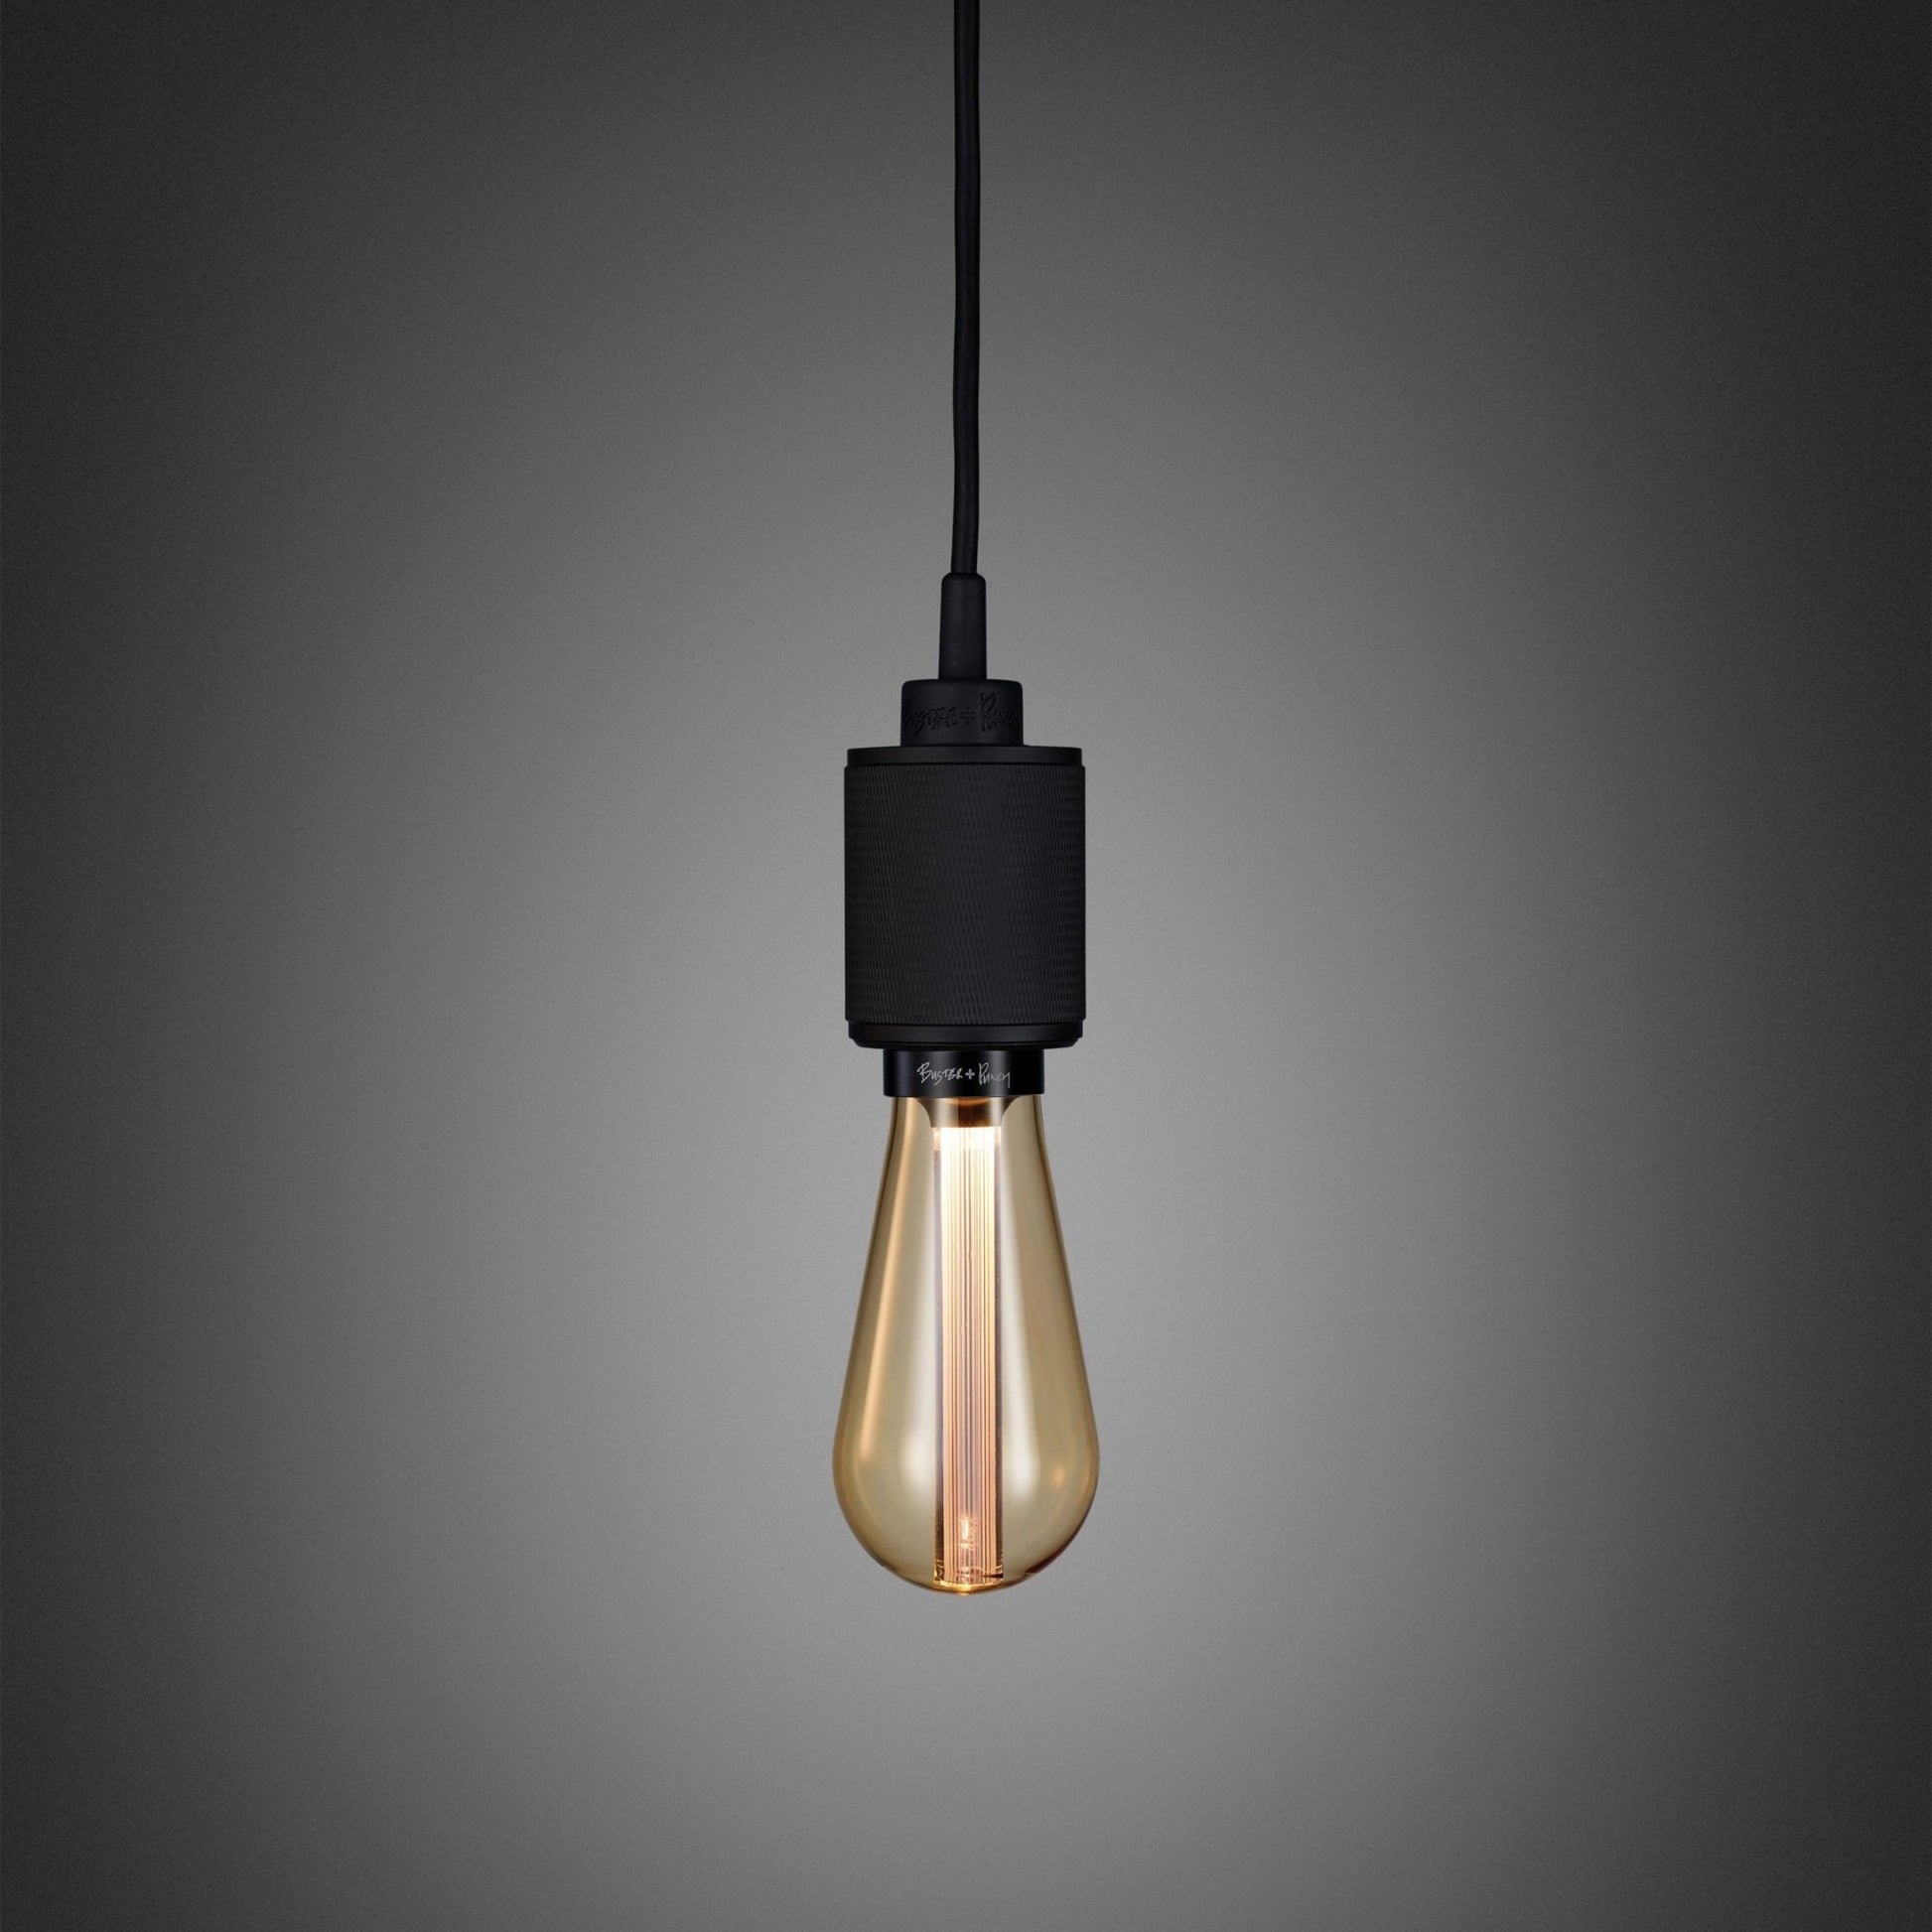 Industrial Pendant Light HEAVY METAL / Black - |VESIMI Design| Luxury and Rustic bathrooms online